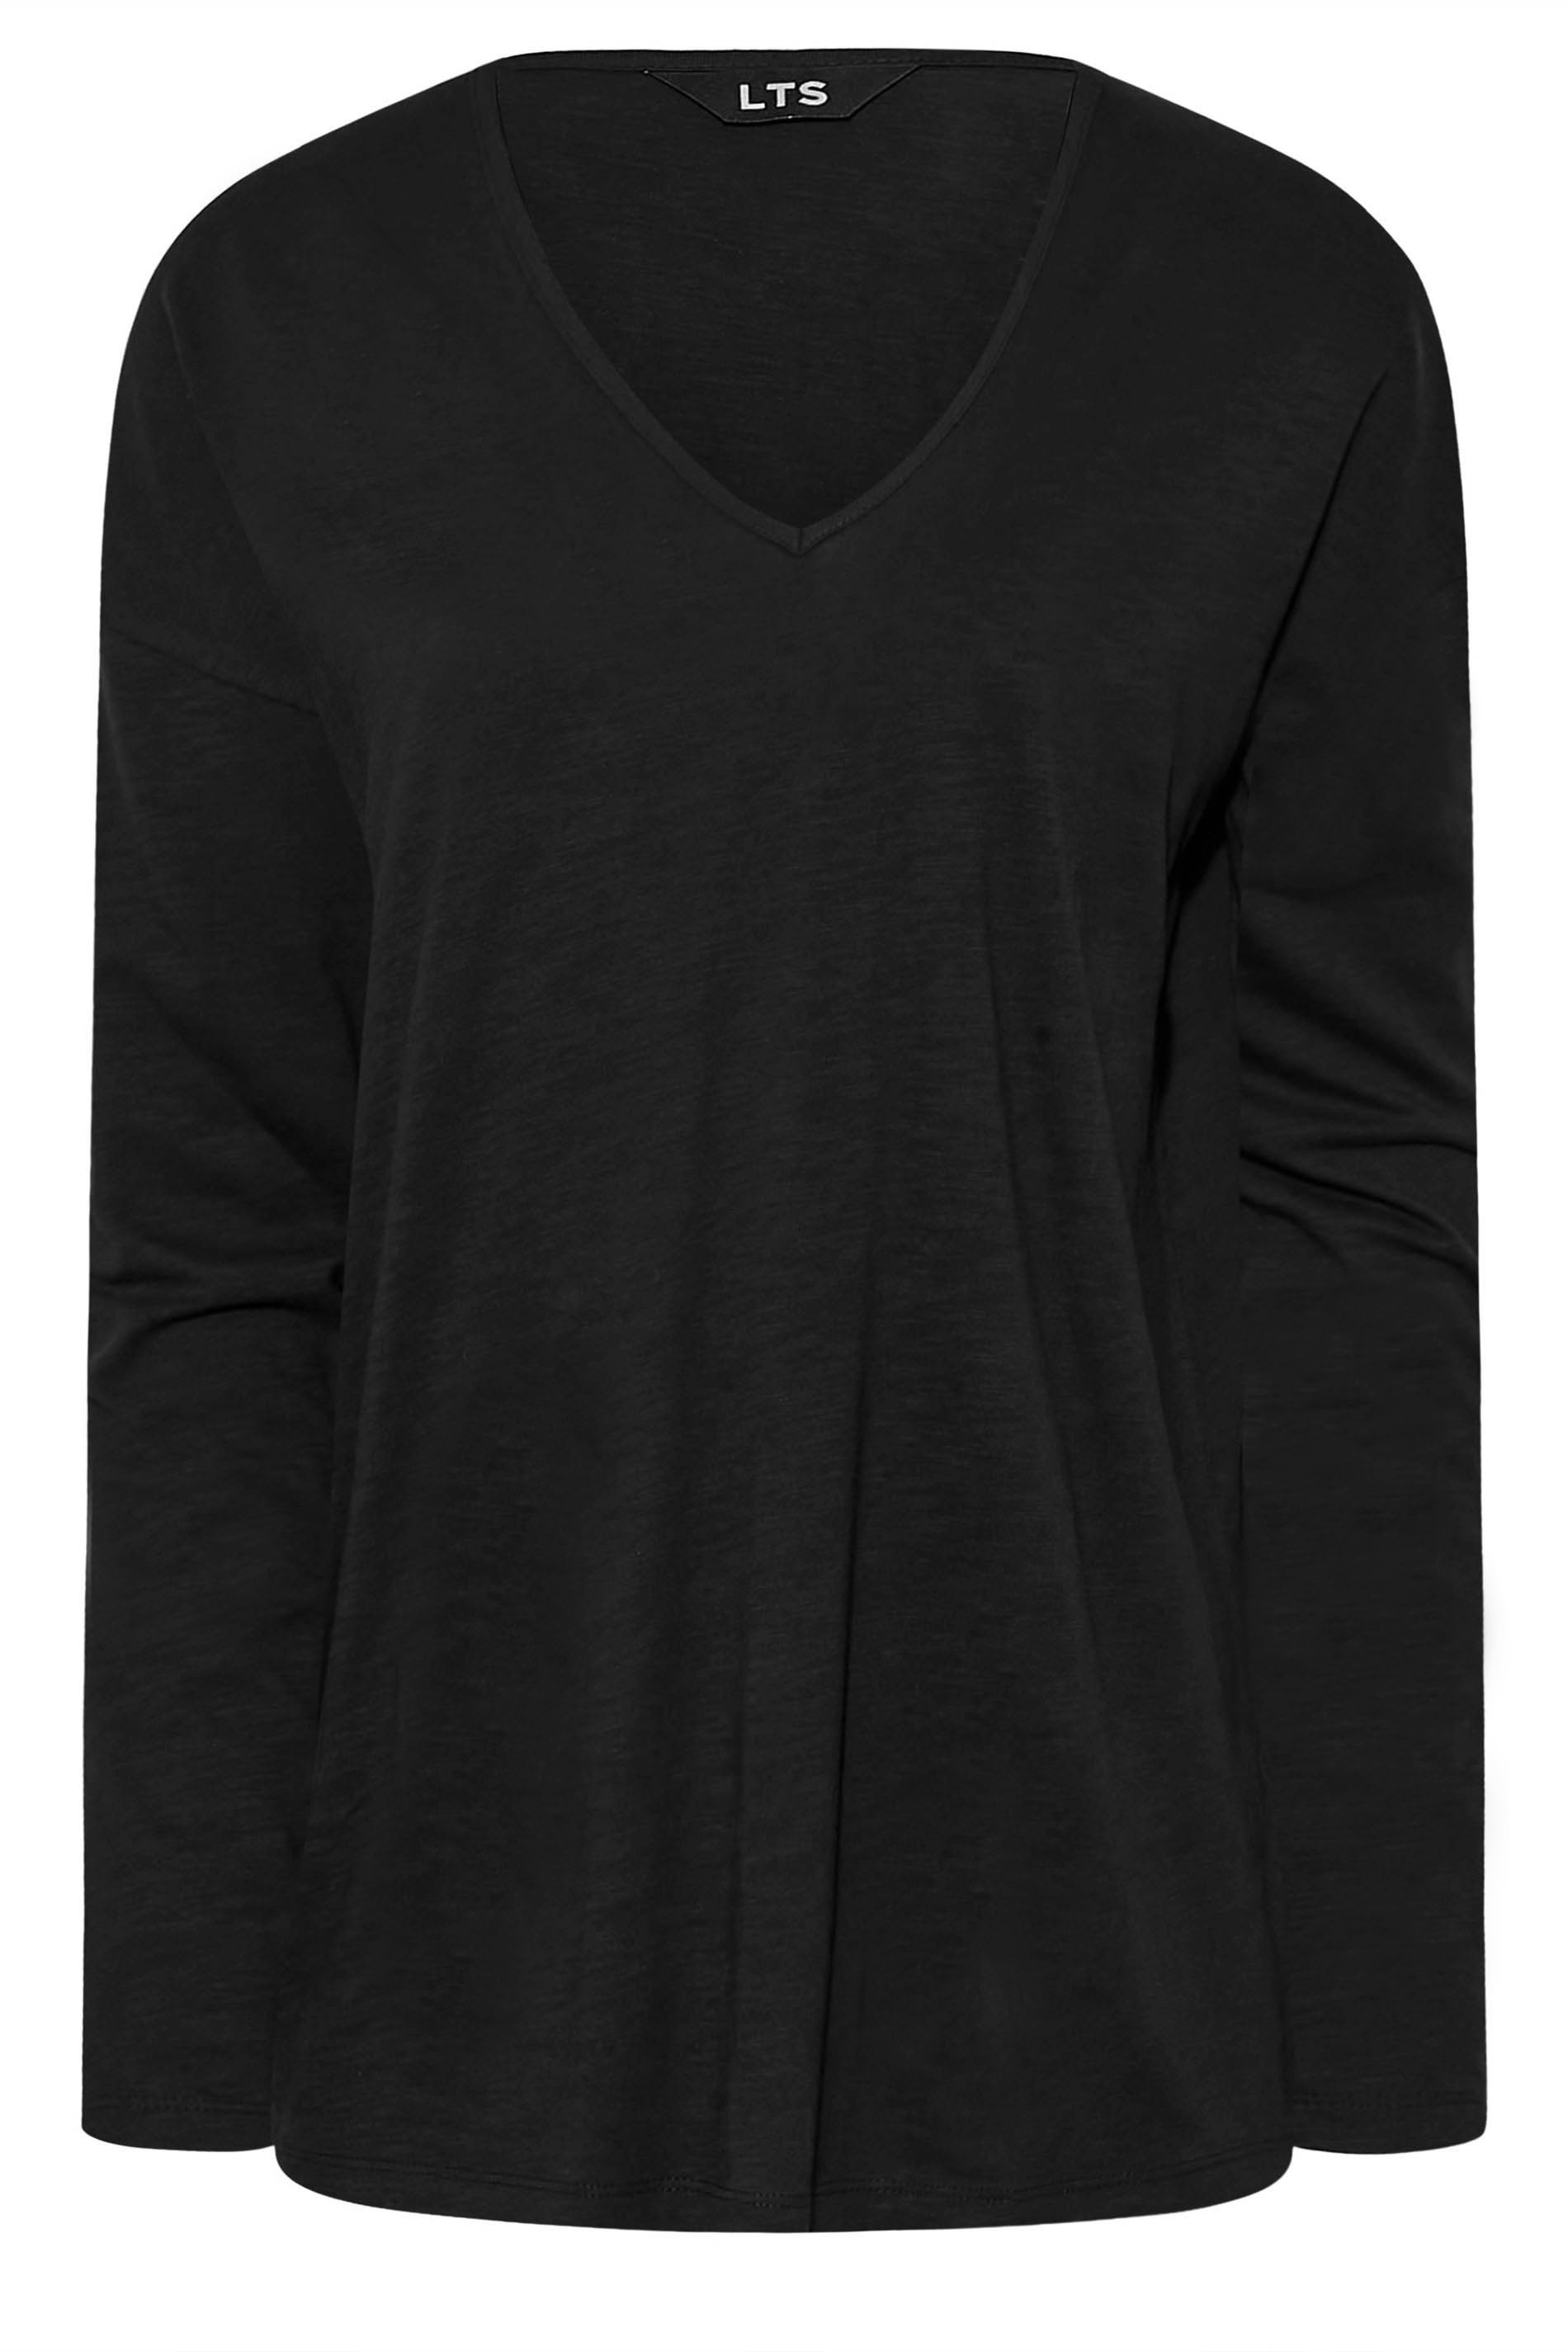 LTS Tall Women's Black V-Neck Long Sleeve Cotton T-Shirt | Long Tall Sally